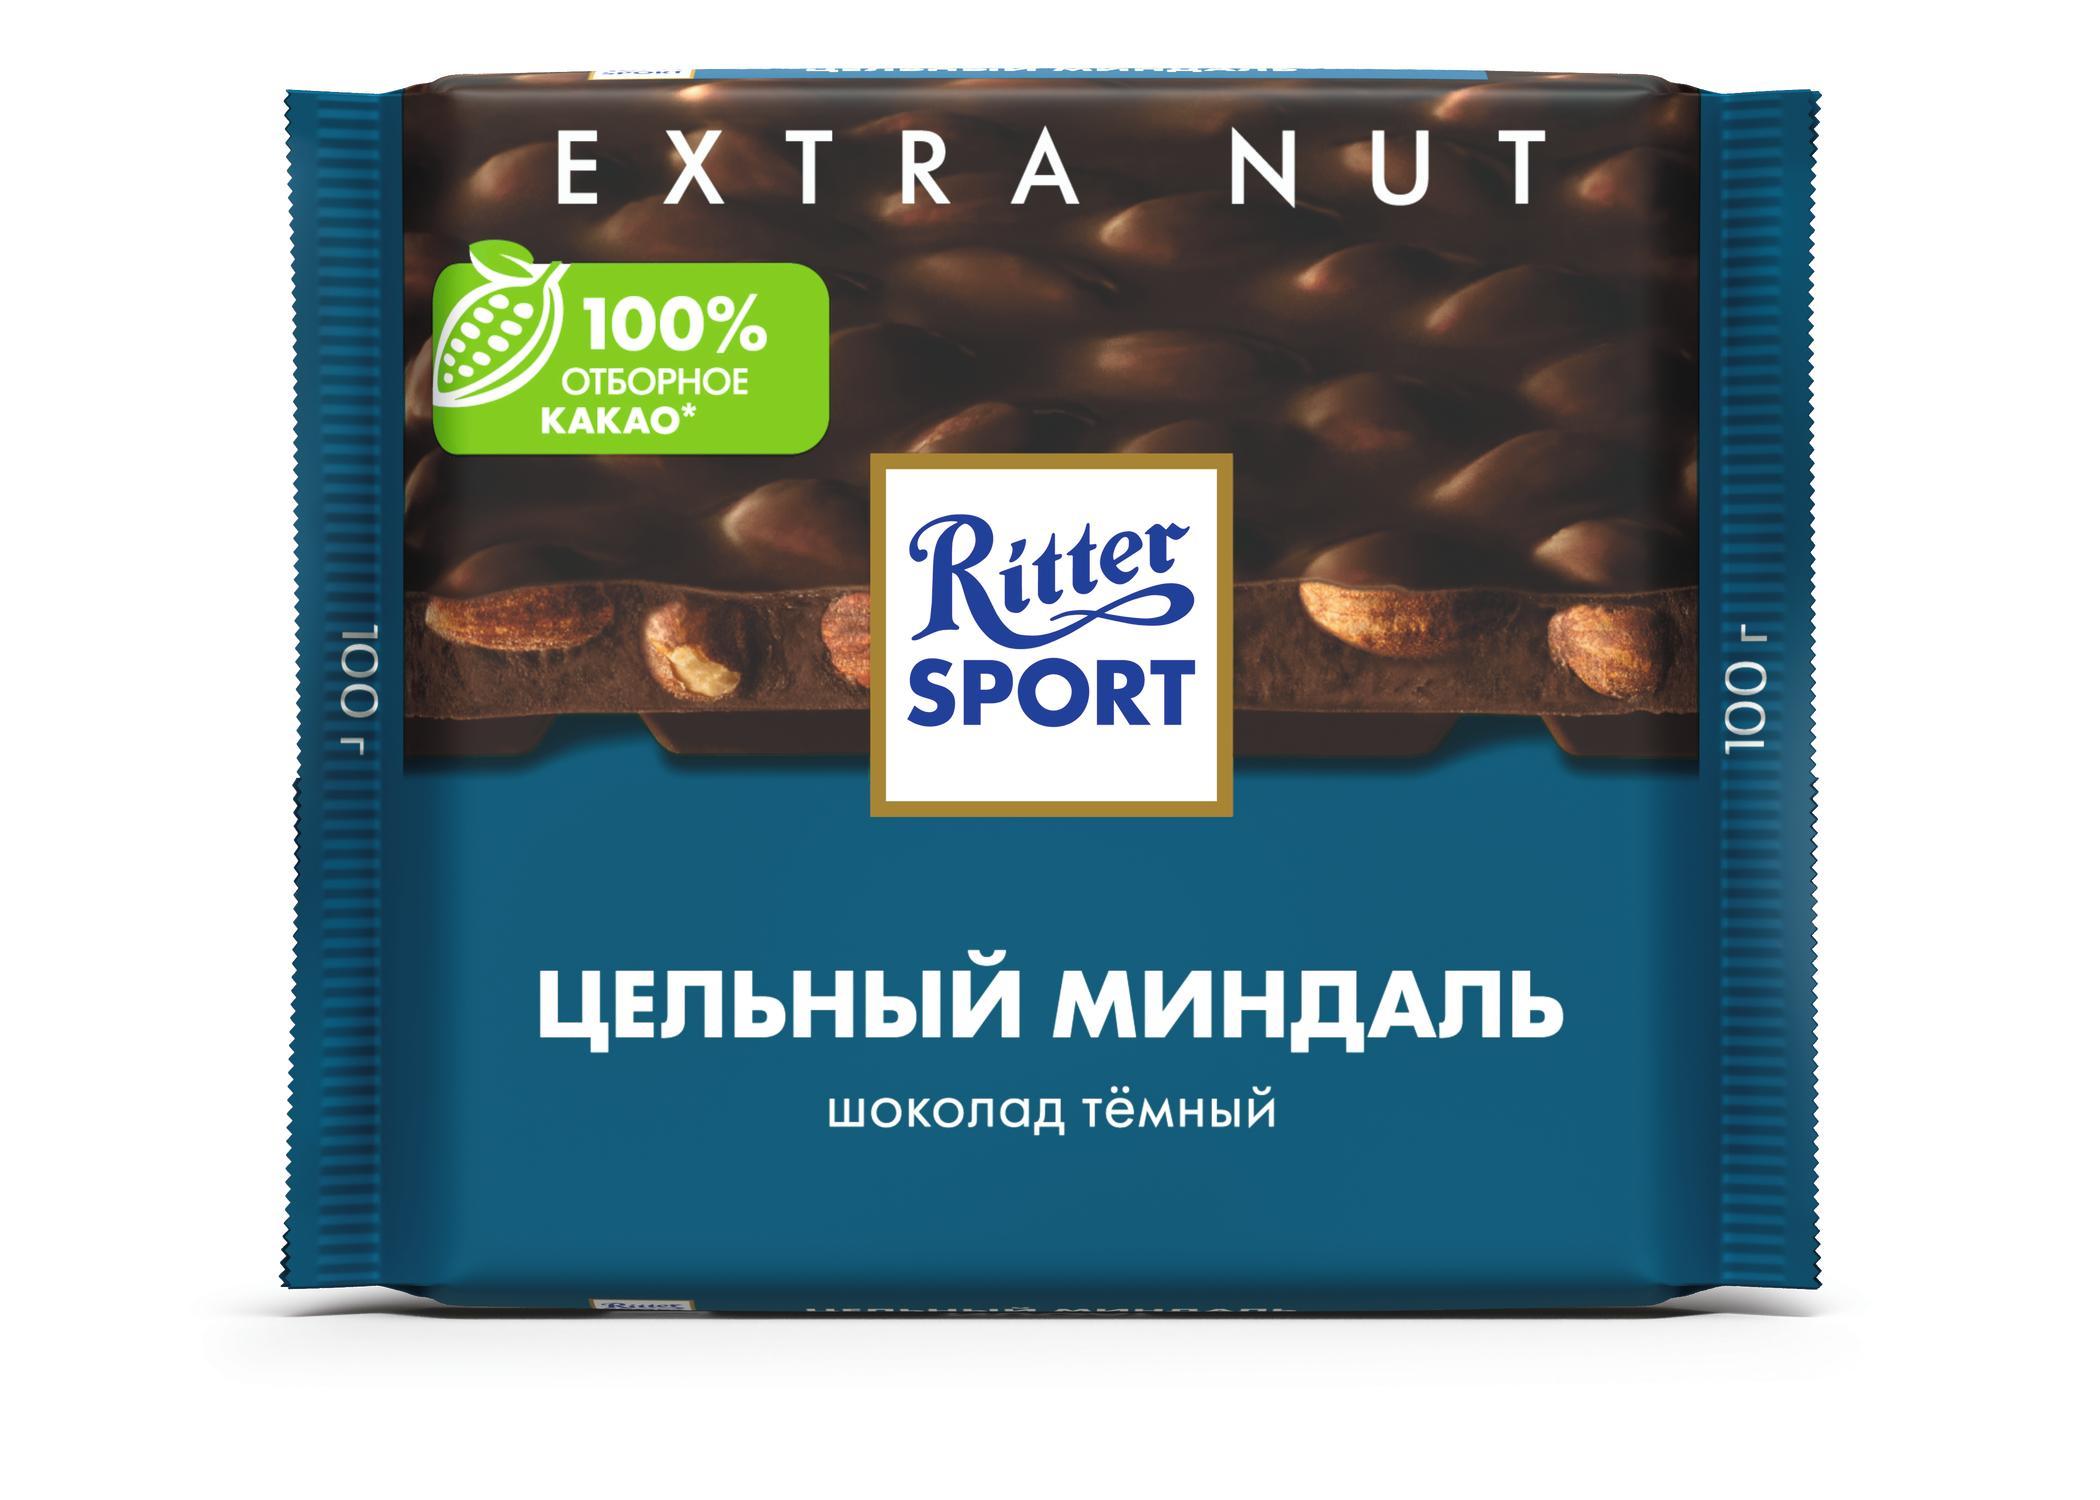 Шоколад цельный миндаль Ritter Sport, 100 гр., флоу-пак